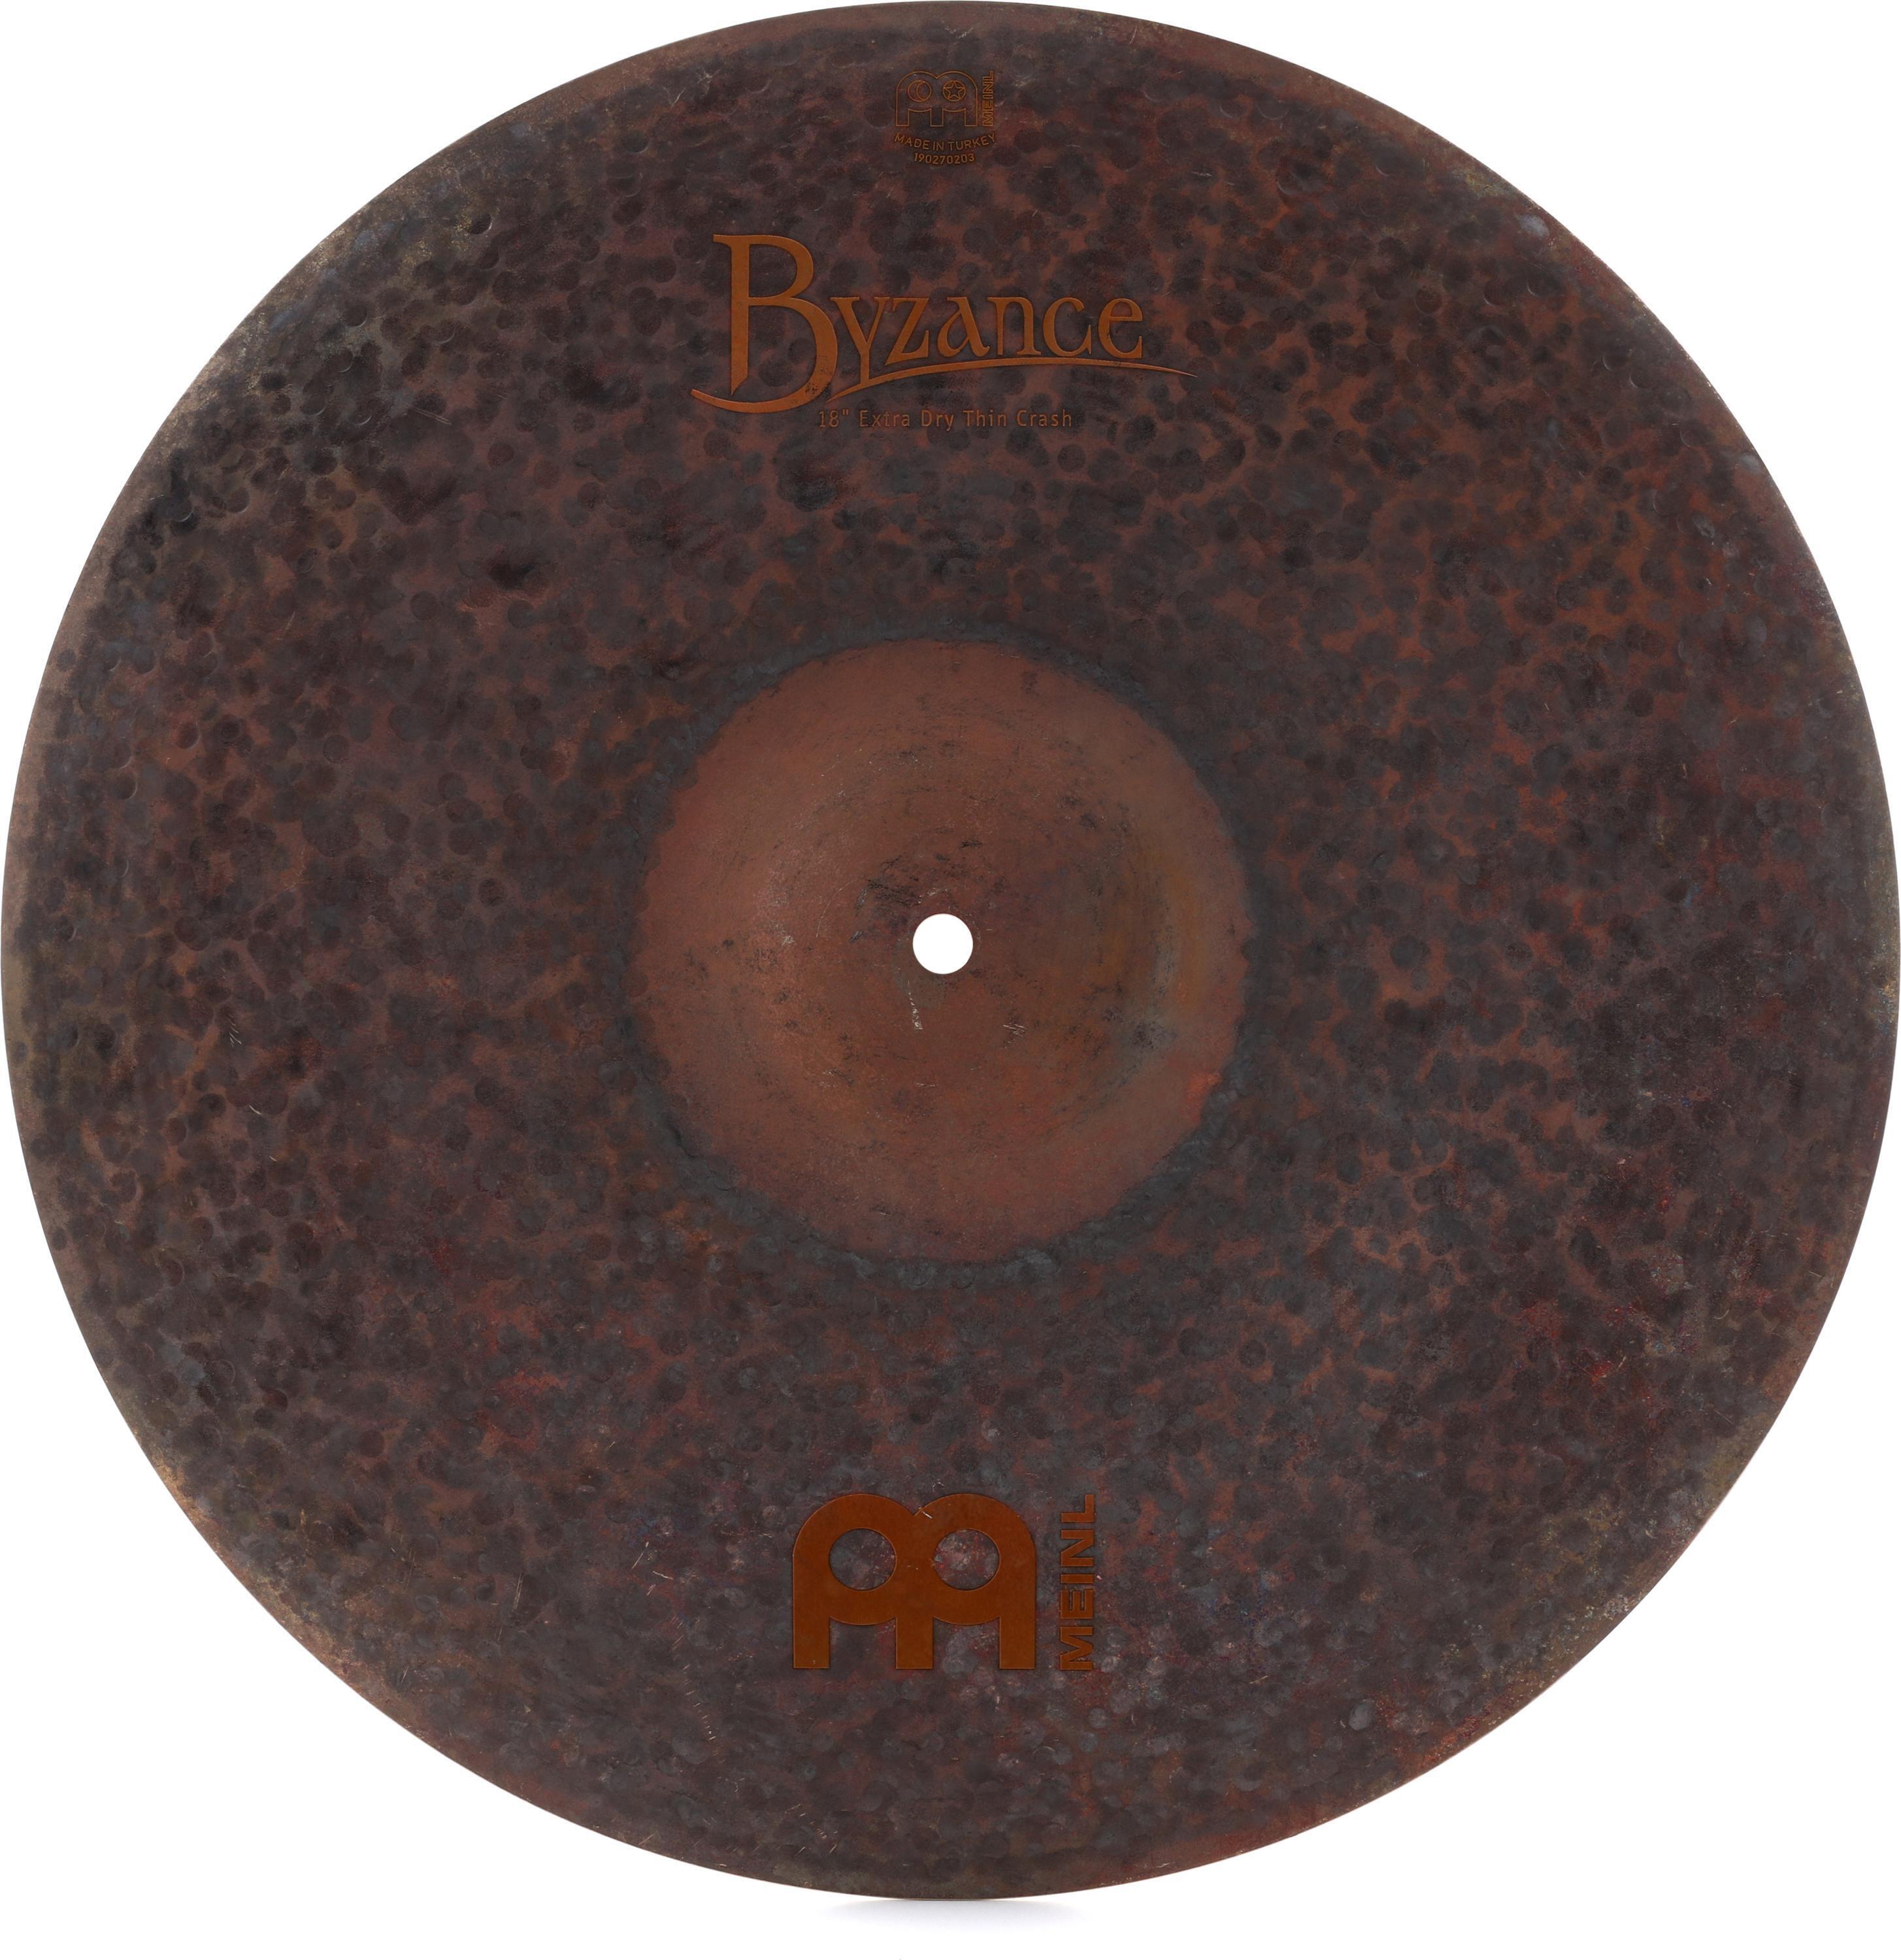 Bundled Item: Meinl Cymbals 18 inch Byzance Extra Dry Thin Crash Cymbal